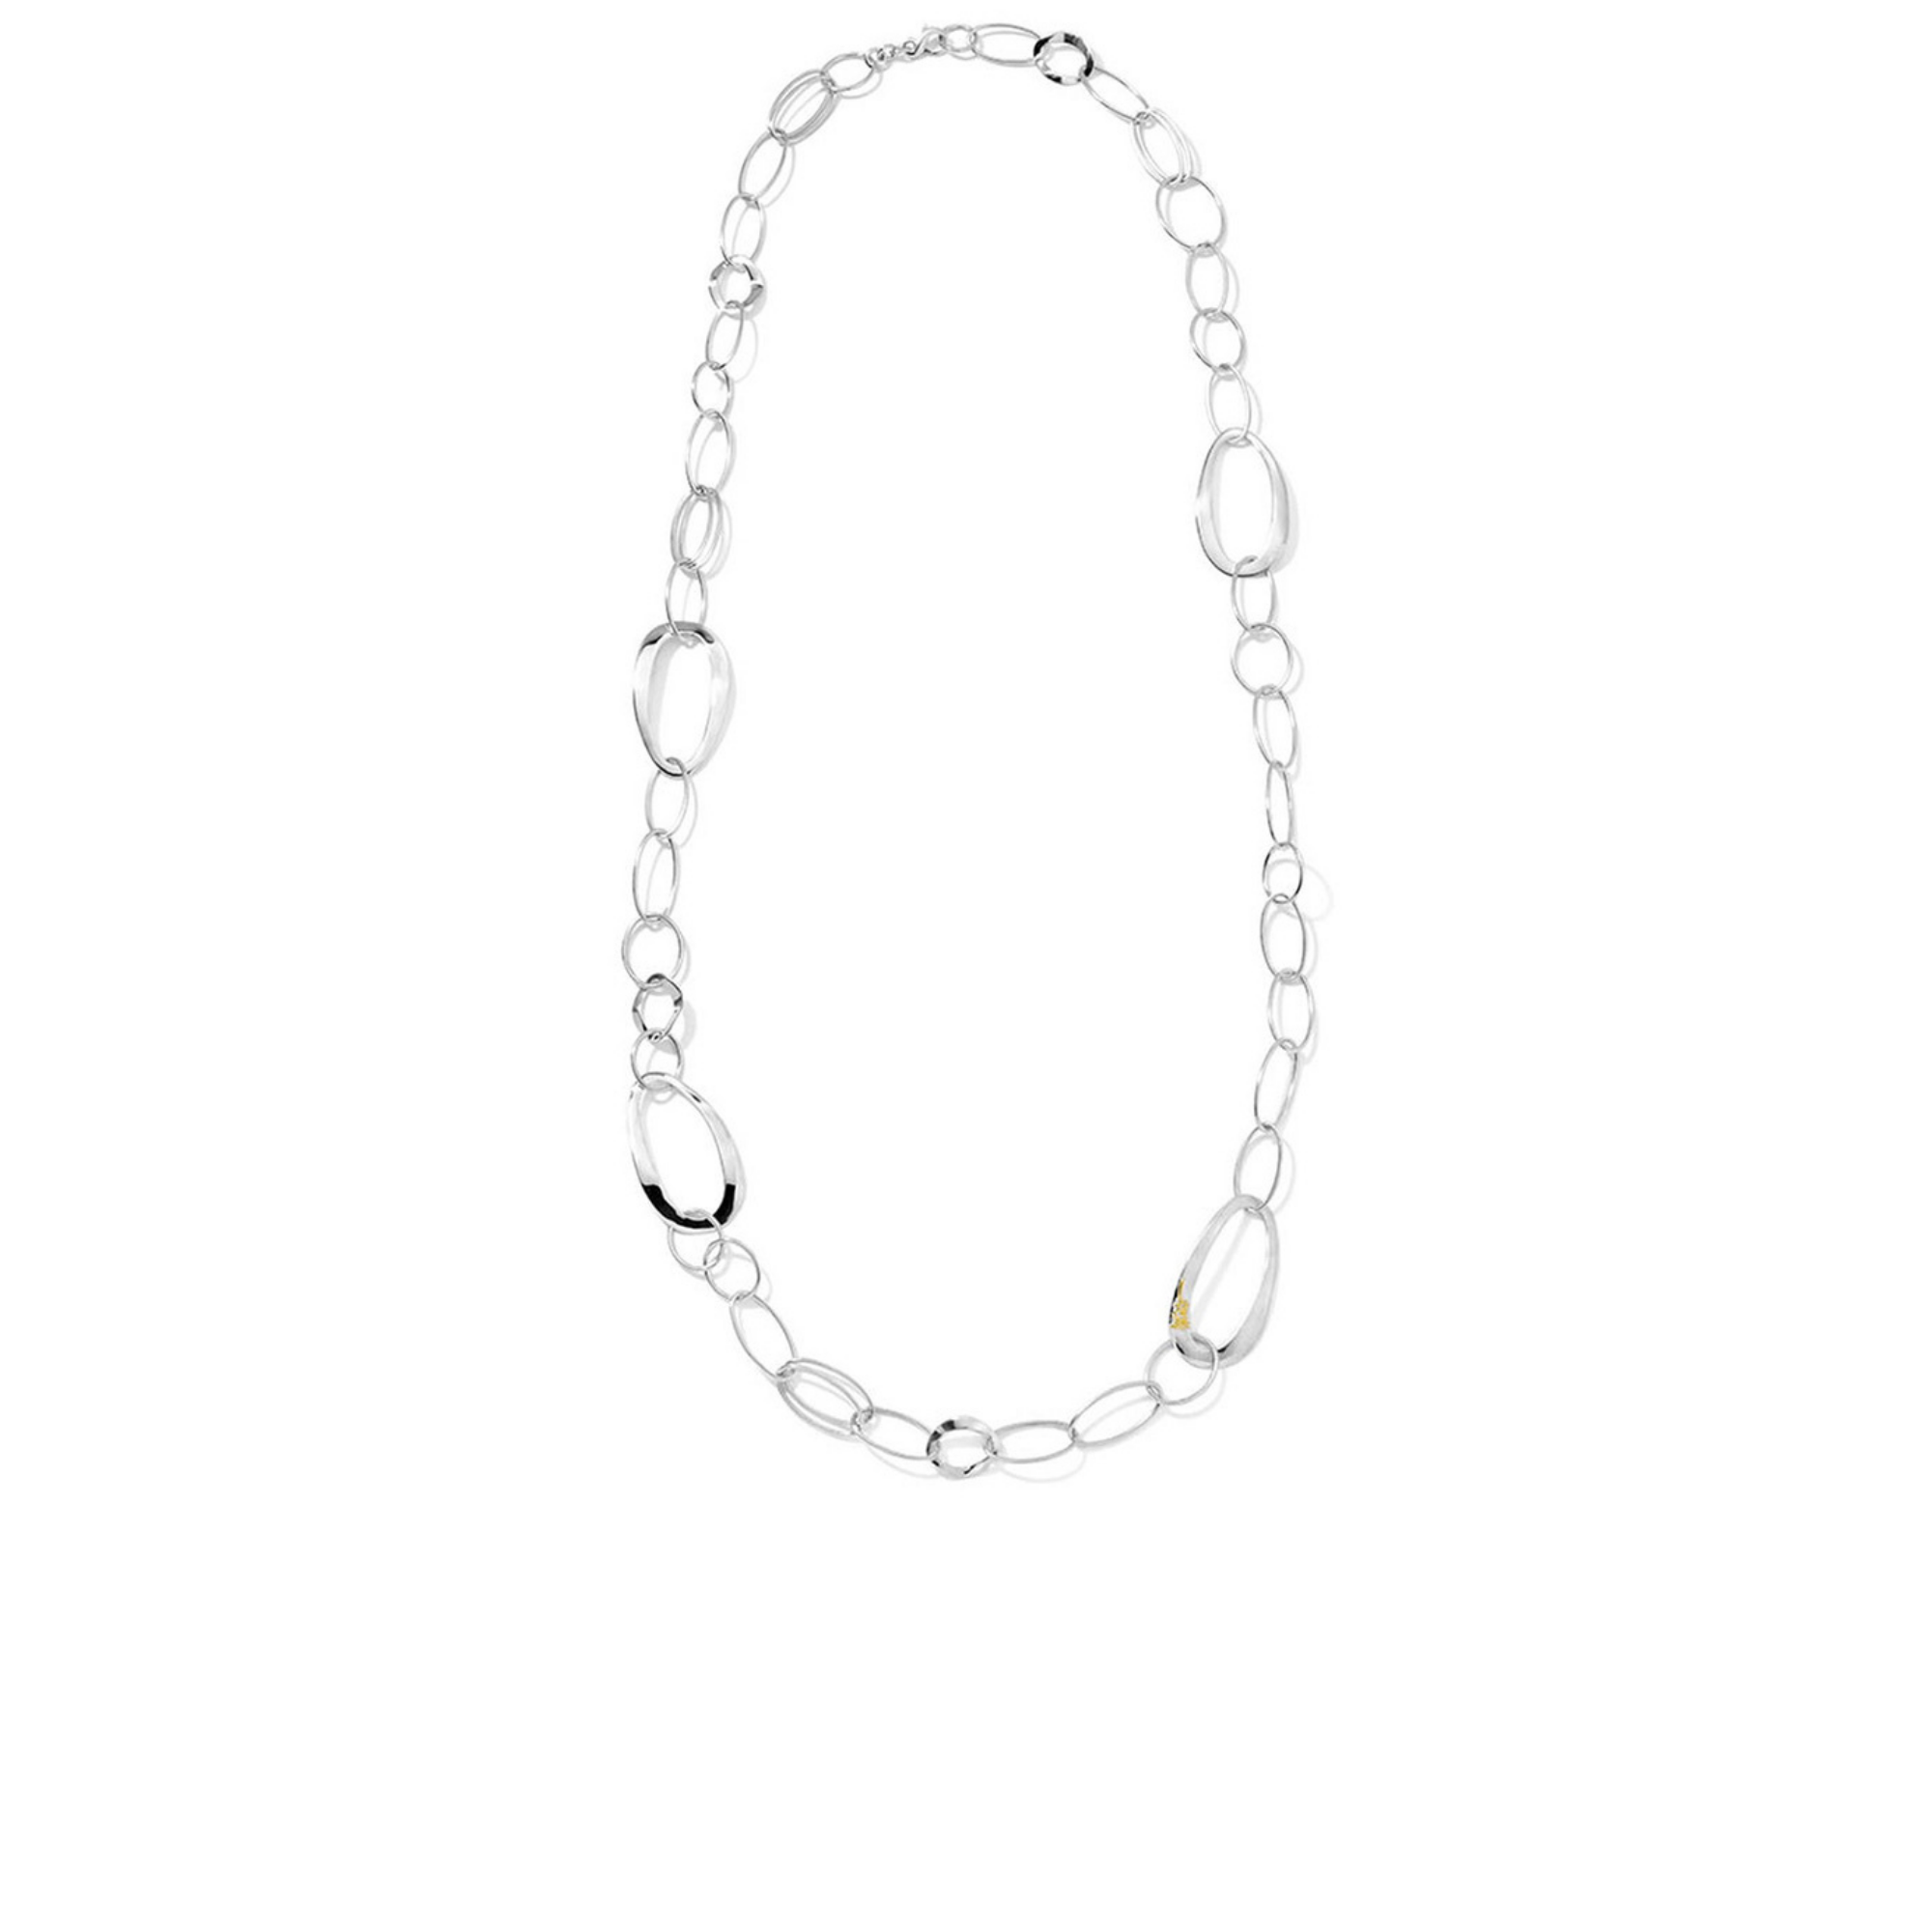 Ippolita Sterling silver “Cherish” chain necklace, $995 at Zadok Jewelers